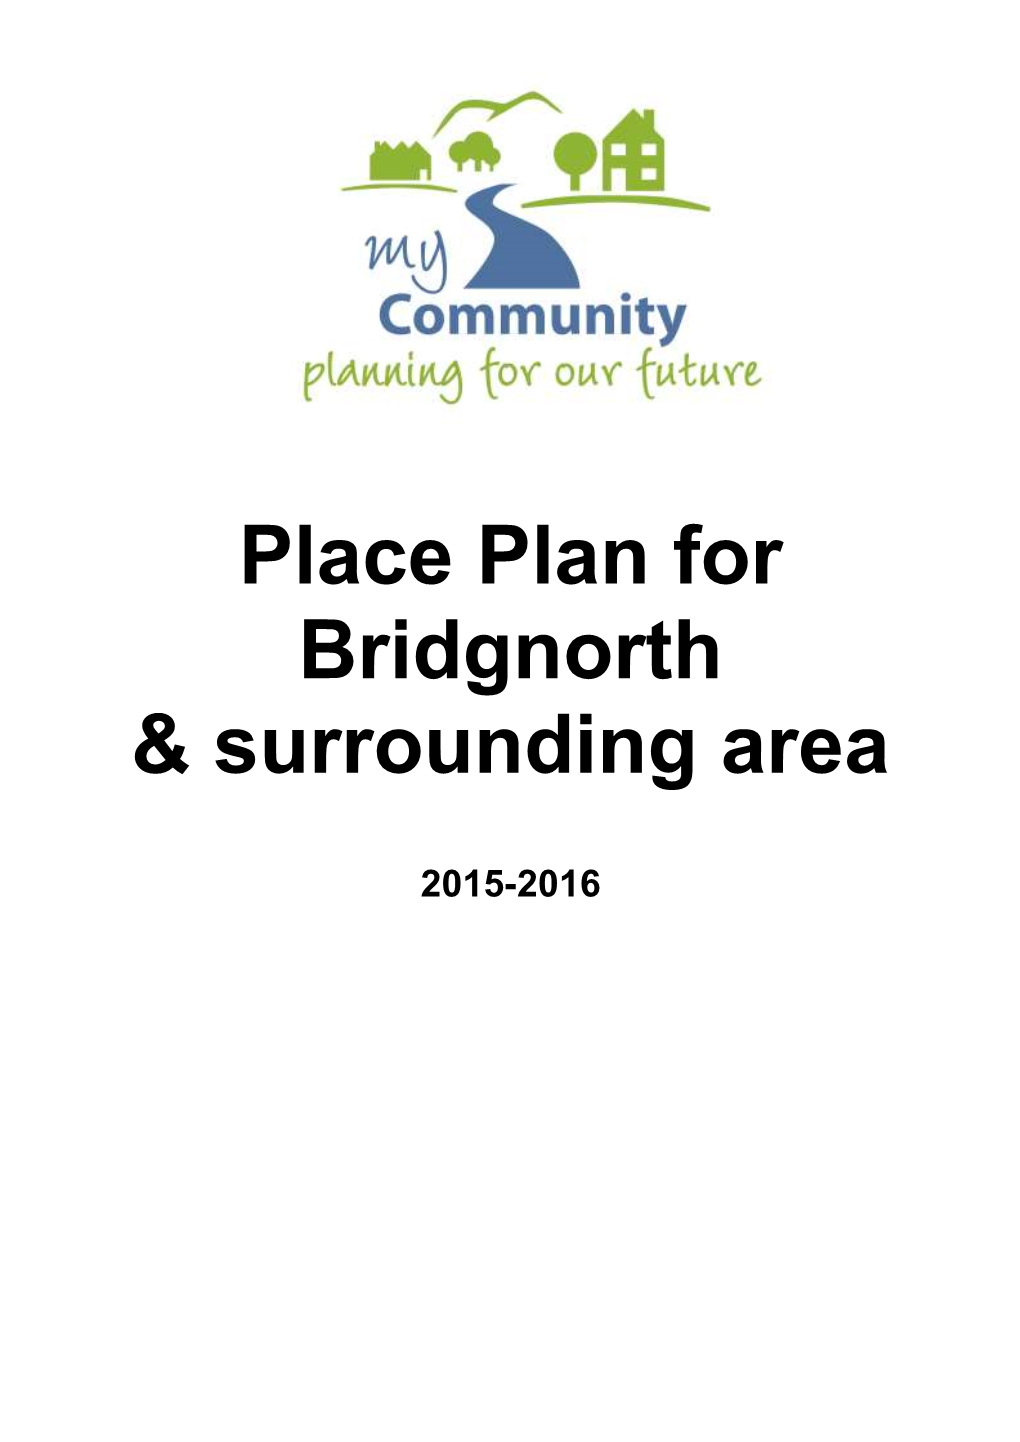 Place Plan for Bridgnorth & Surrounding Area